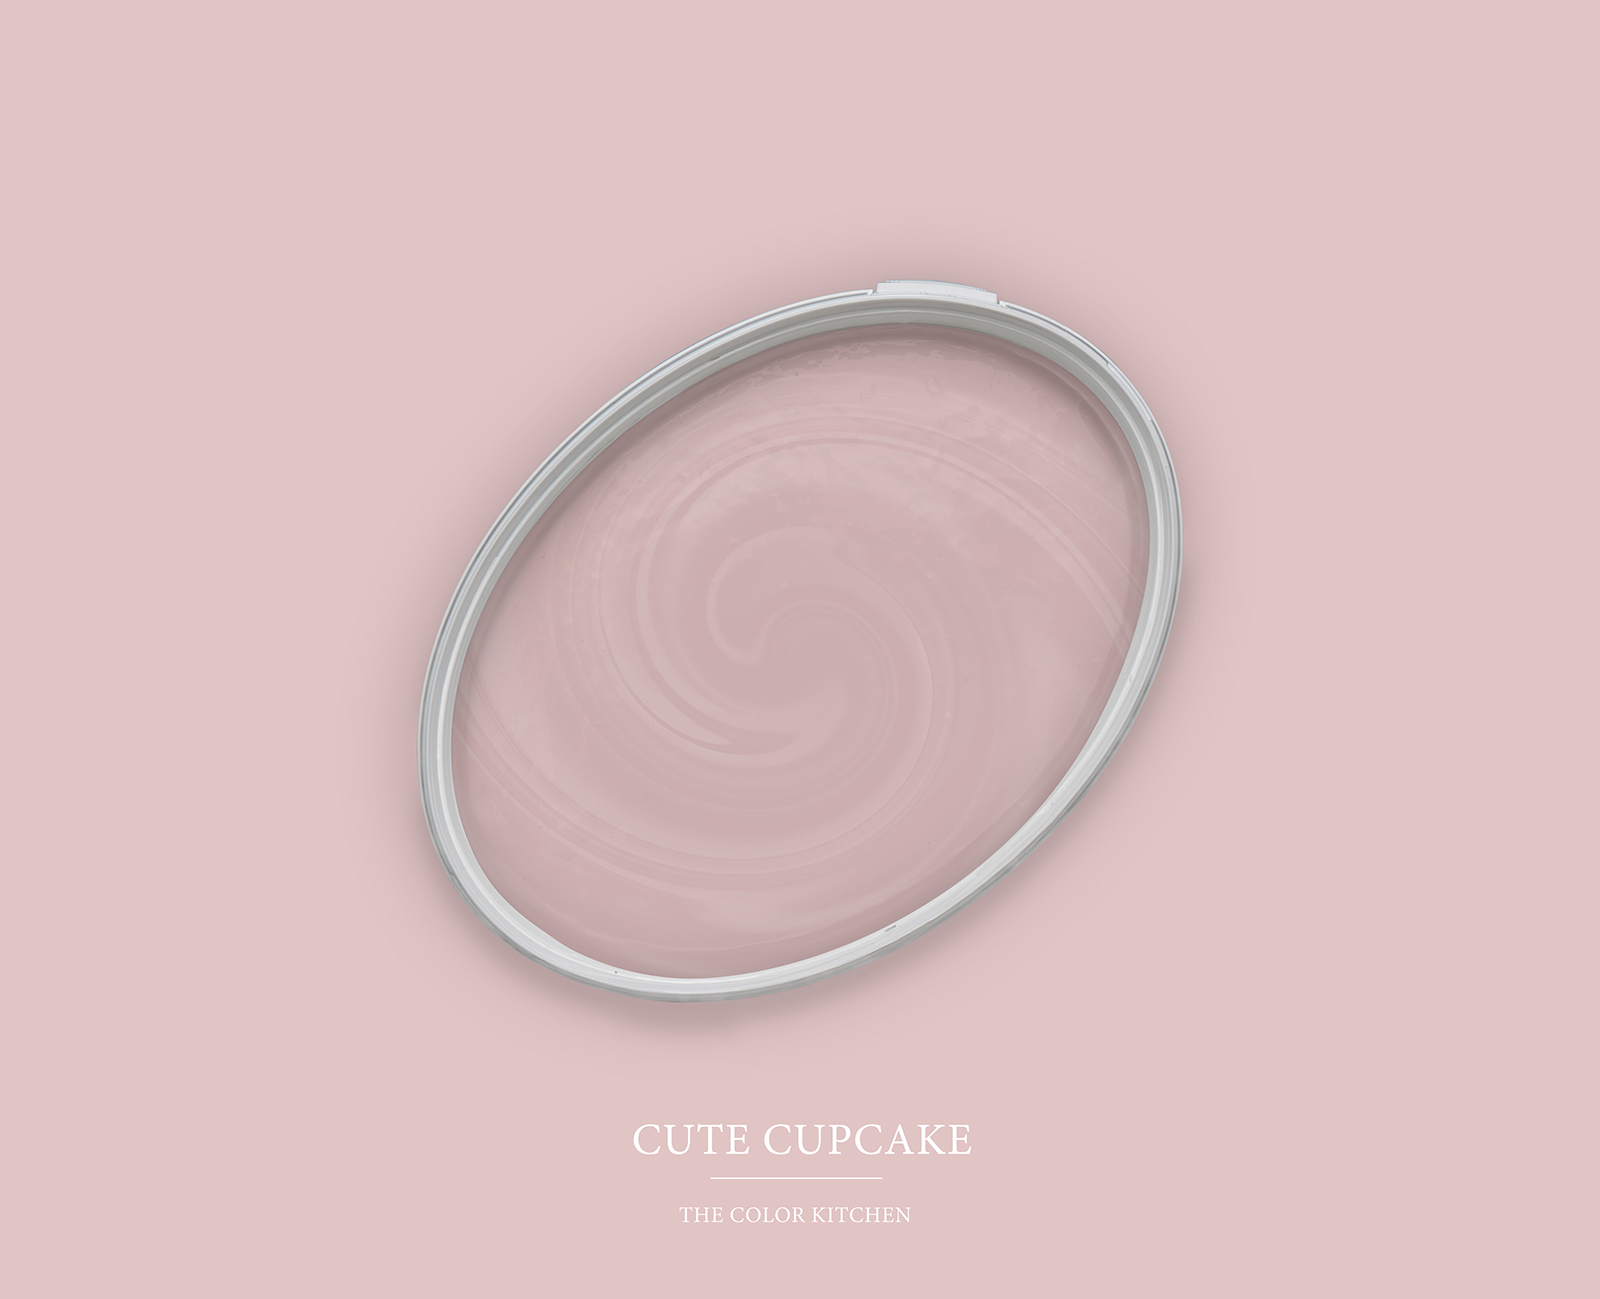 Muurverf TCK7008 »Cute Cupcake« in delicaat roze – 5.0 liter
